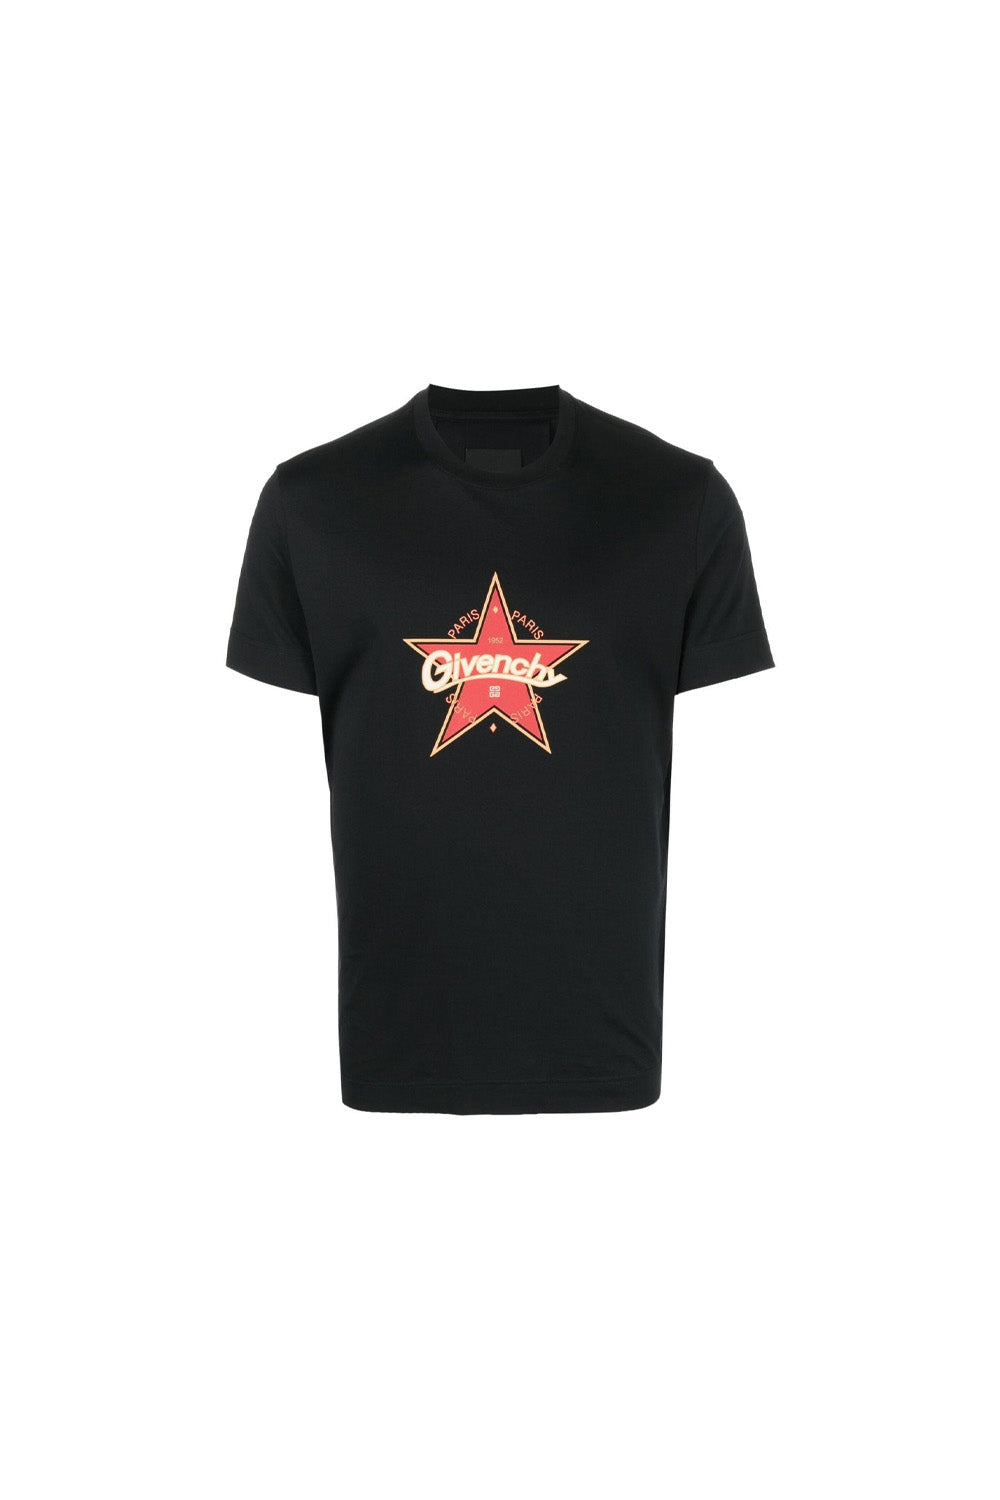 Givenchy star-print logo T-shirt